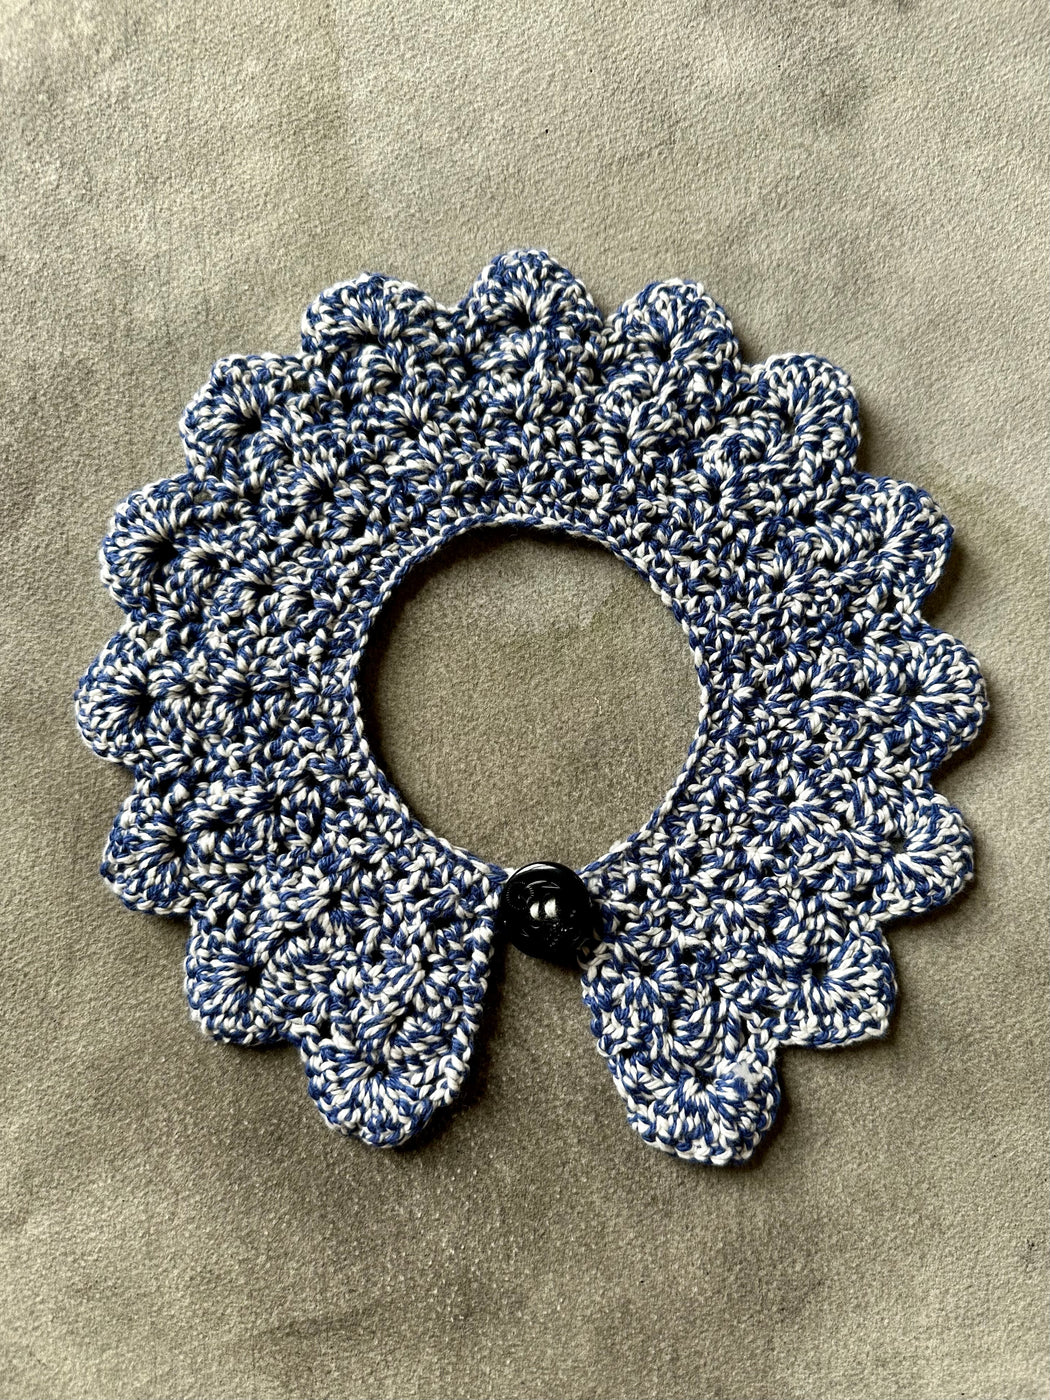 "Blue Tweed" Hand-Crocheted Collar by Albo